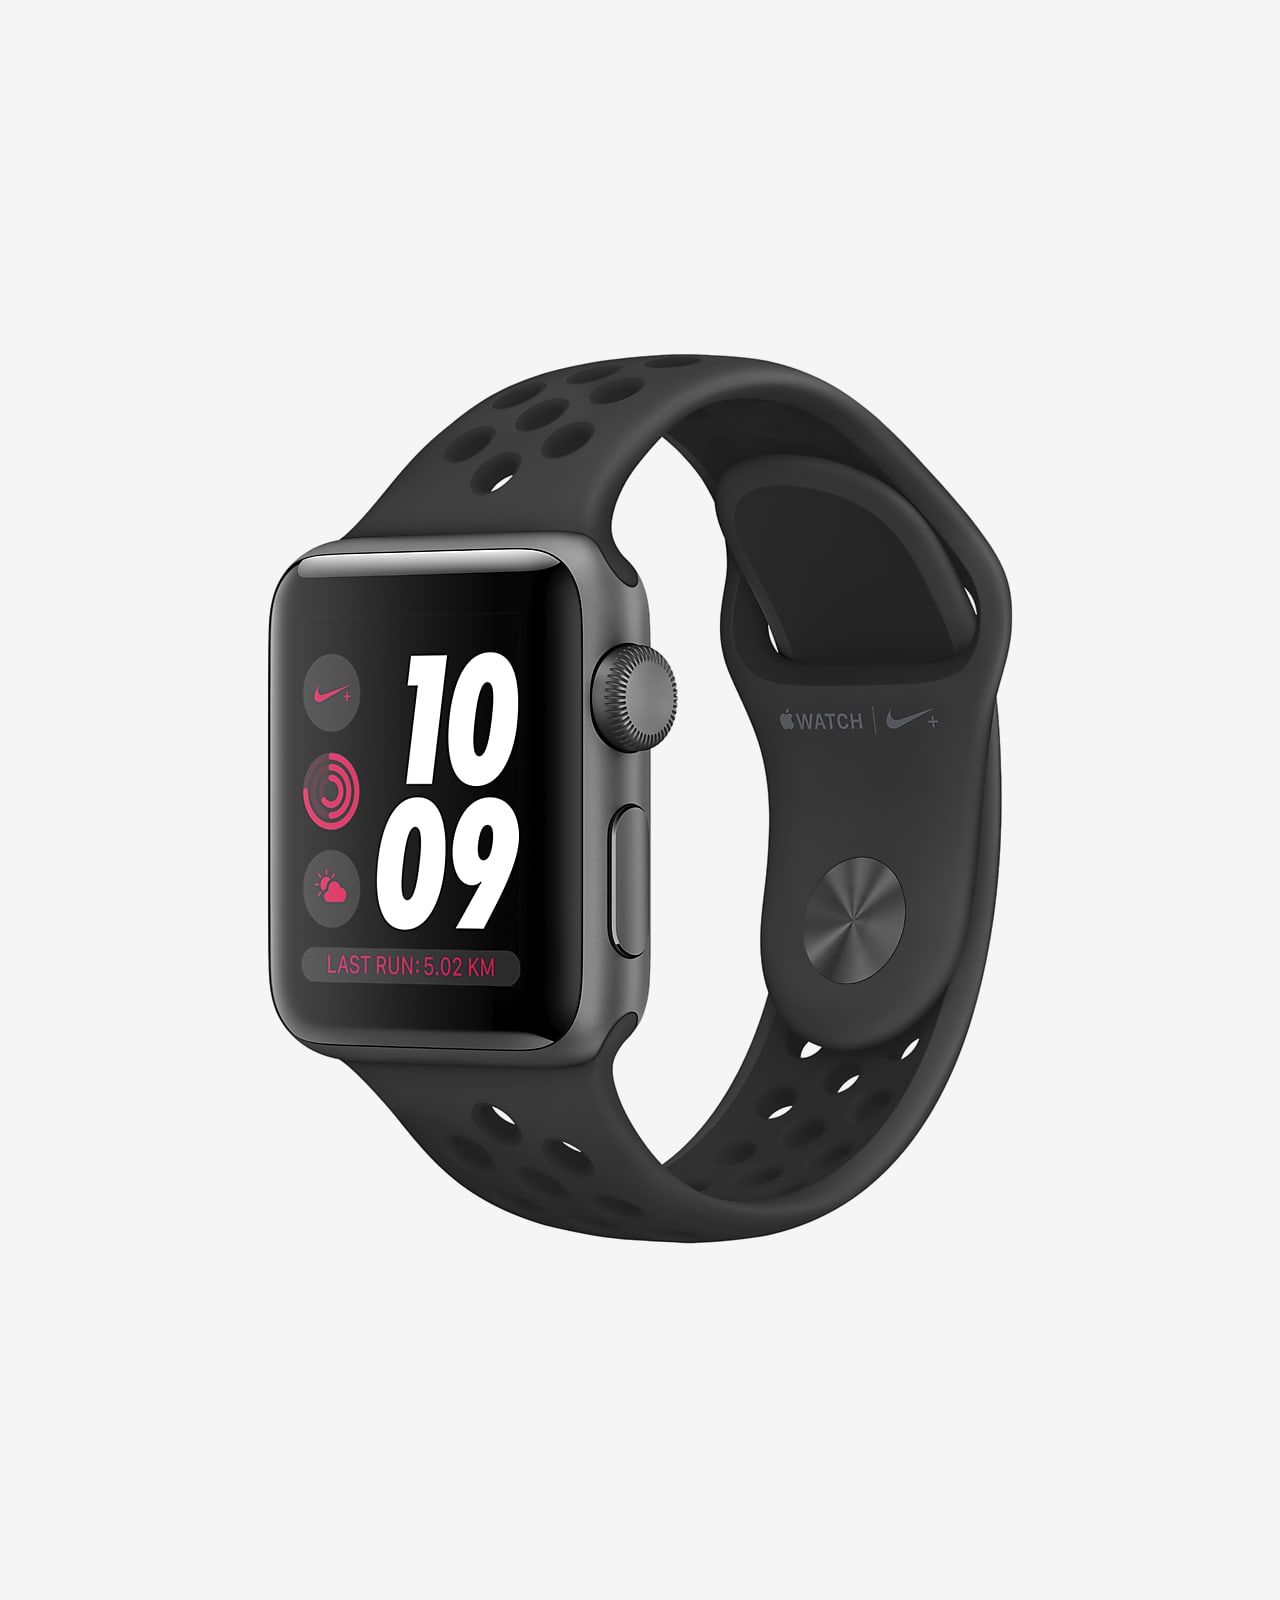 No hagas circuito maíz Apple Watch Nike+ GPS Series 3 (38mm) Open Box Running Watch. Nike PT